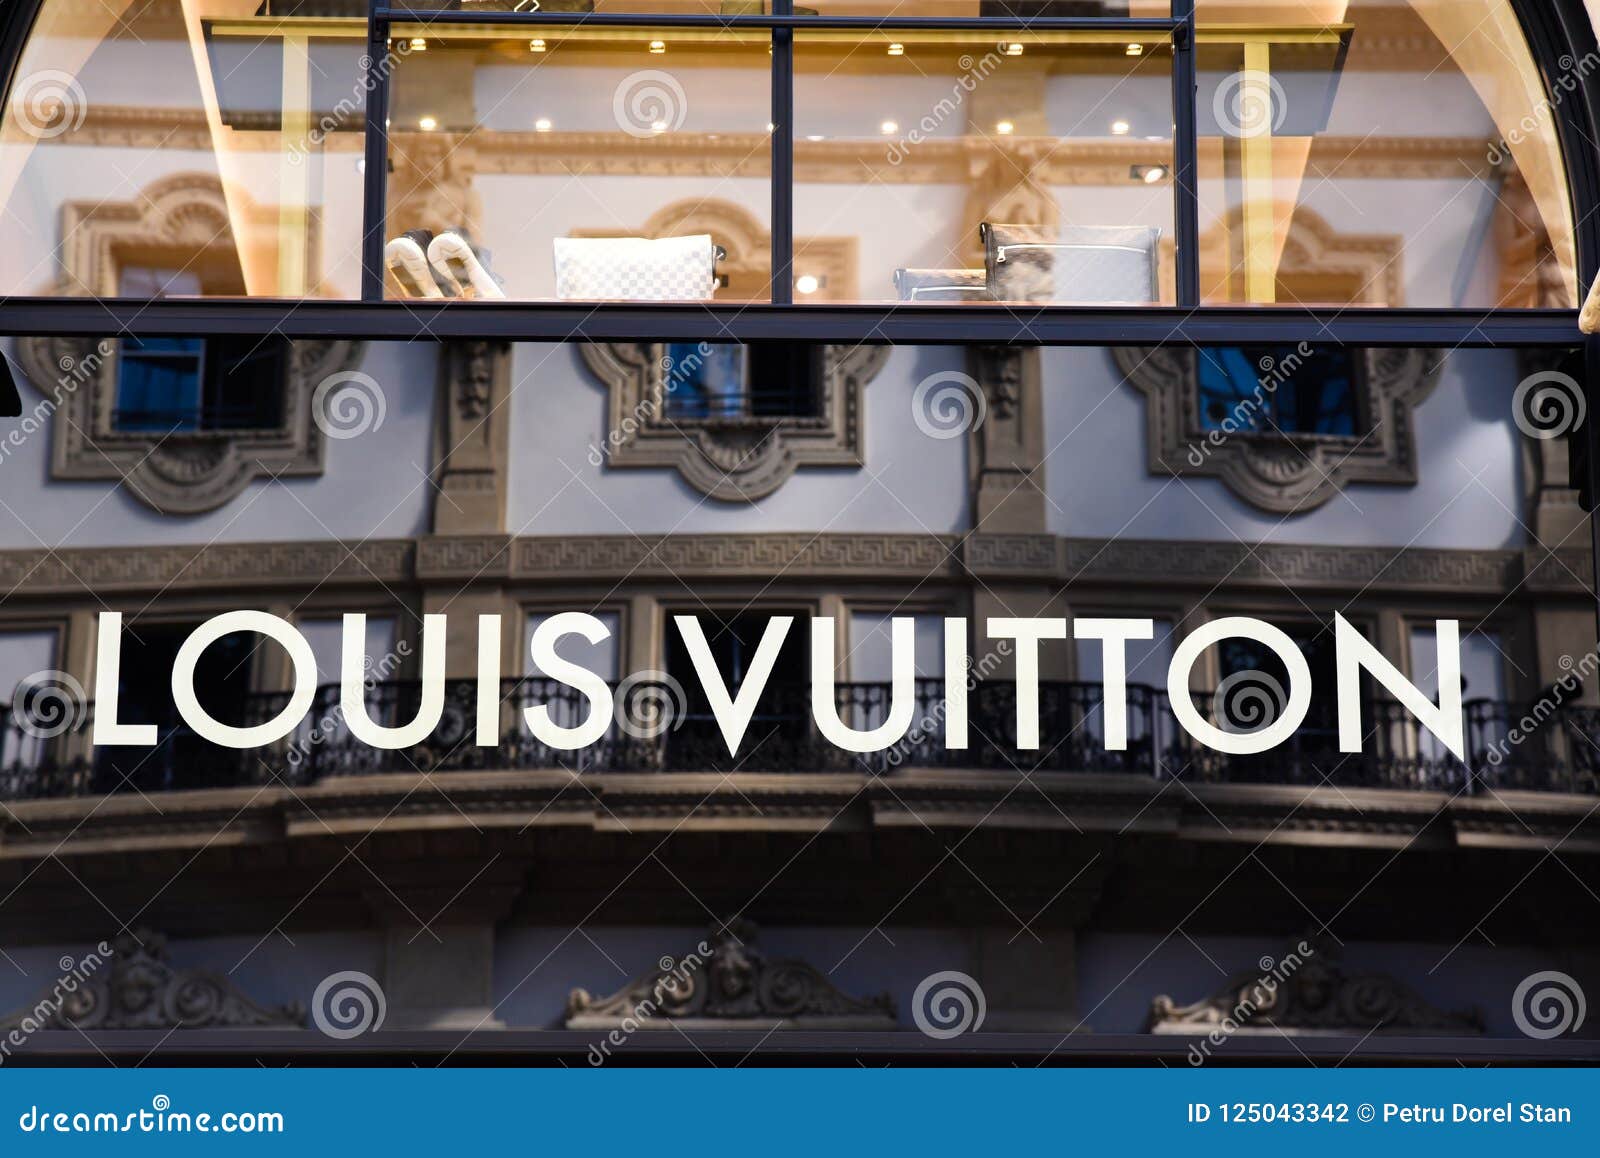 Vuitton Milano Stock Photos - Free & Royalty-Free Stock Photos